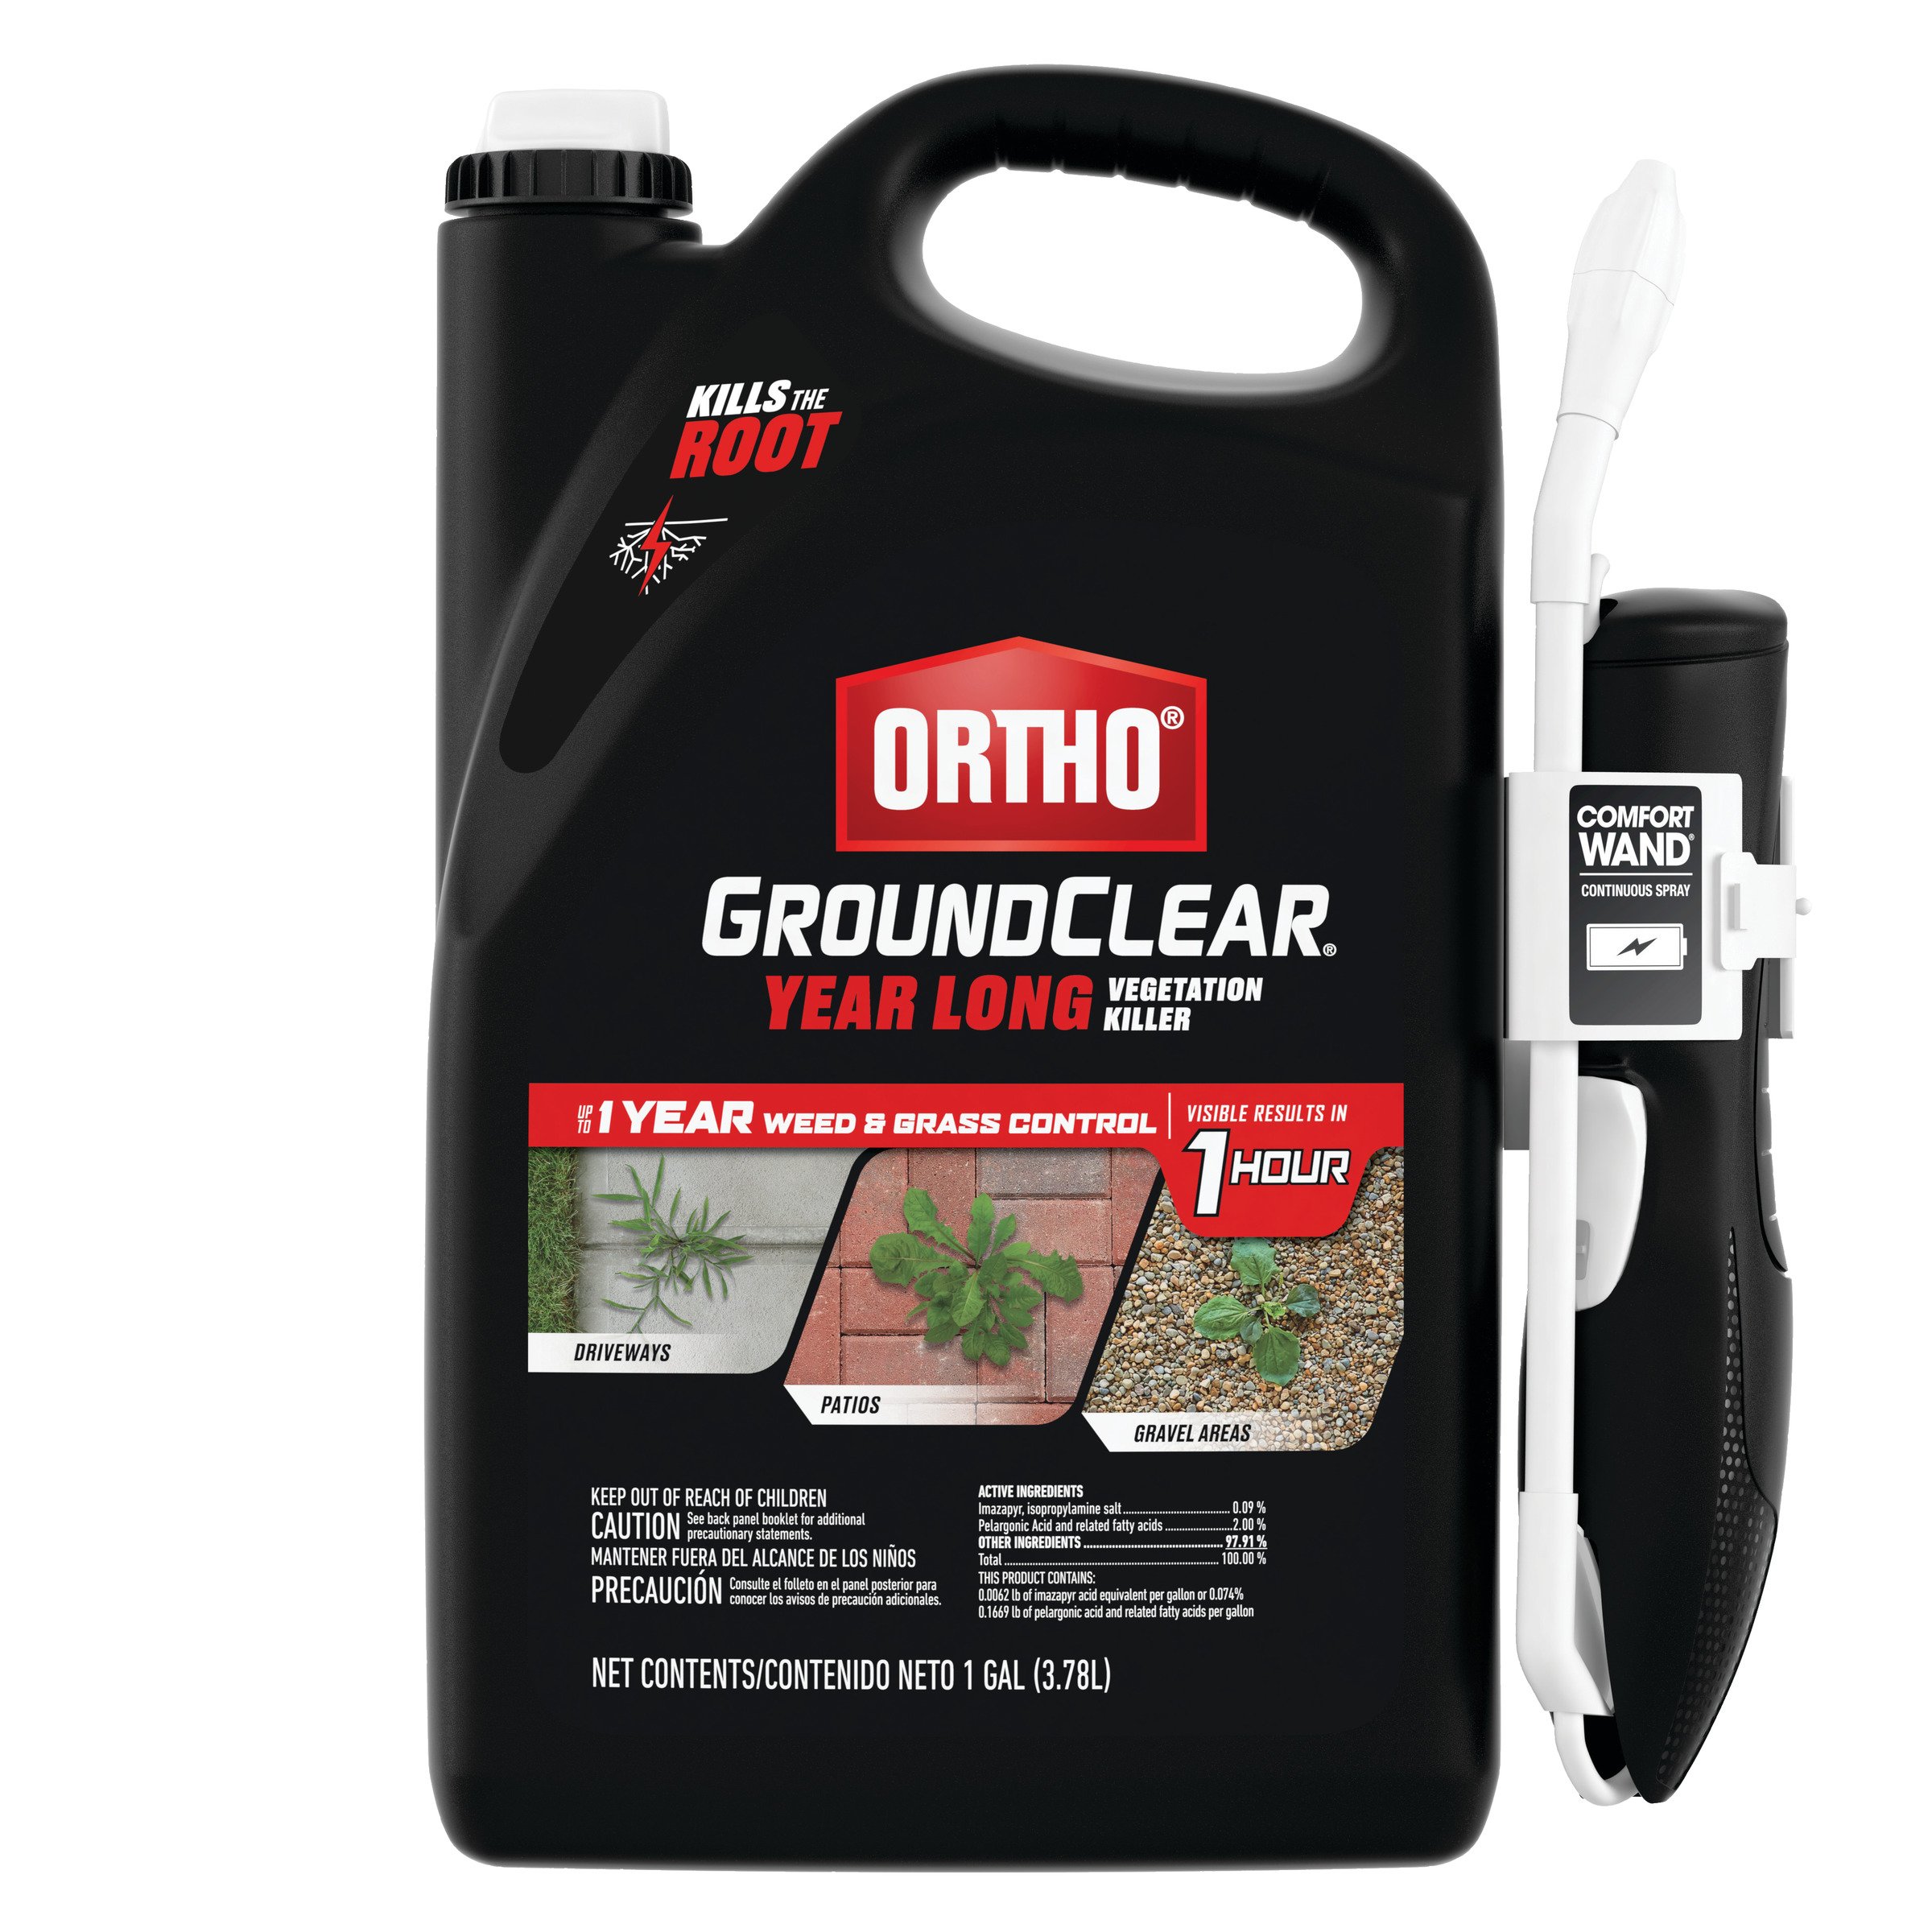 Ortho® GroundClear Year Long Vegetation Killer with Comfort Wand, 1 Gallon Bottle